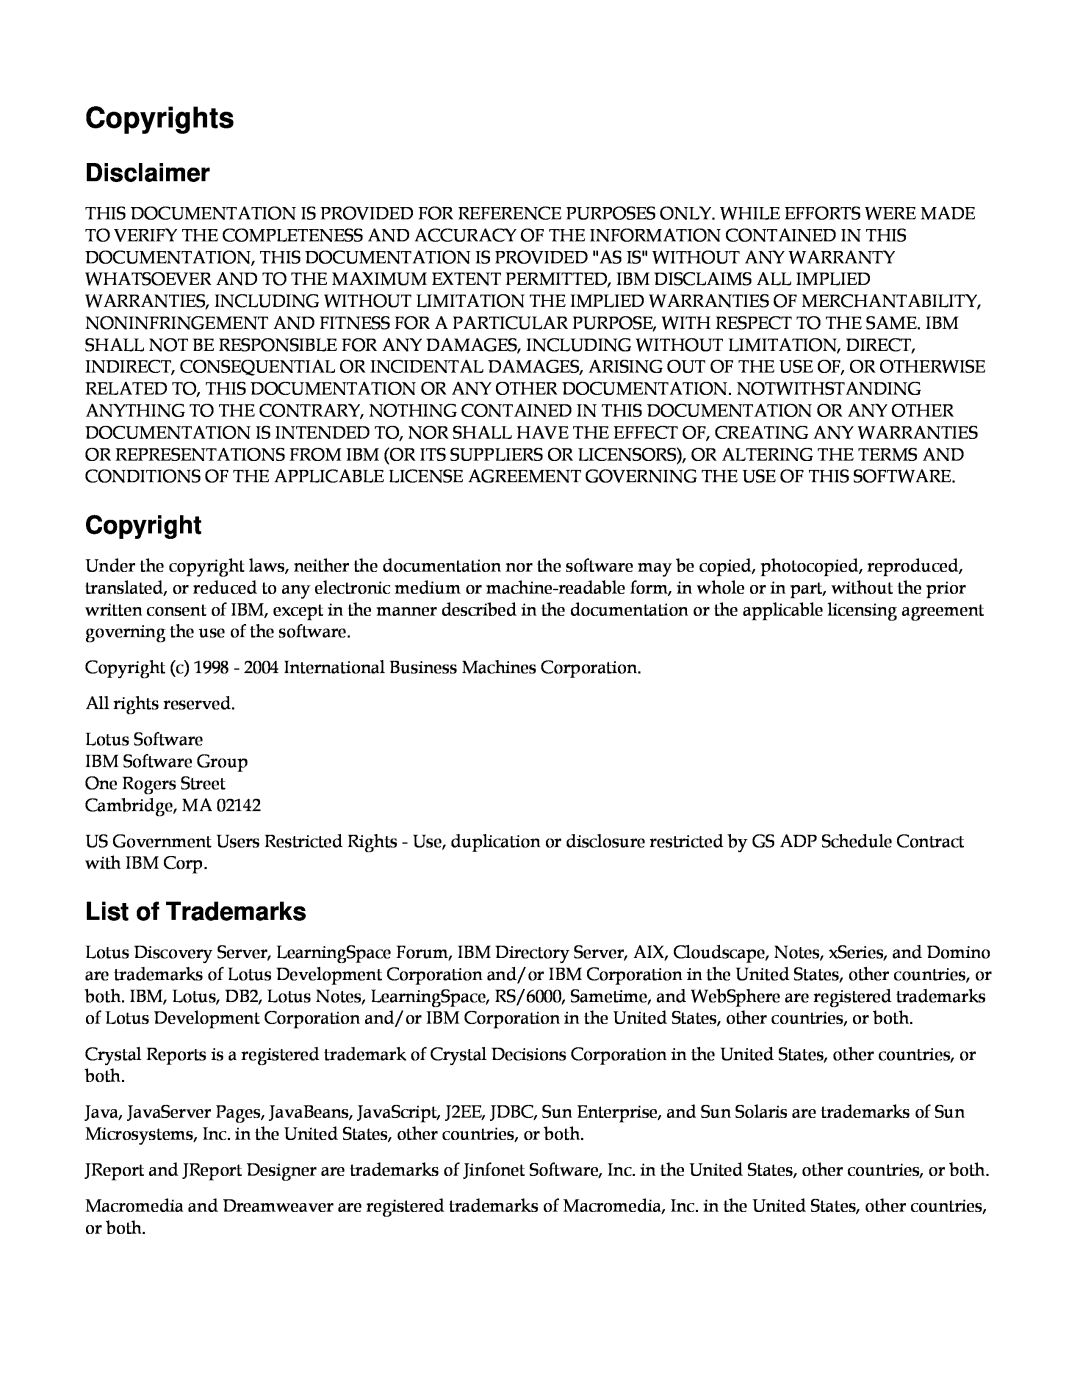 IBM G210-1784-00 manual Copyrights, Disclaimer, List of Trademarks 